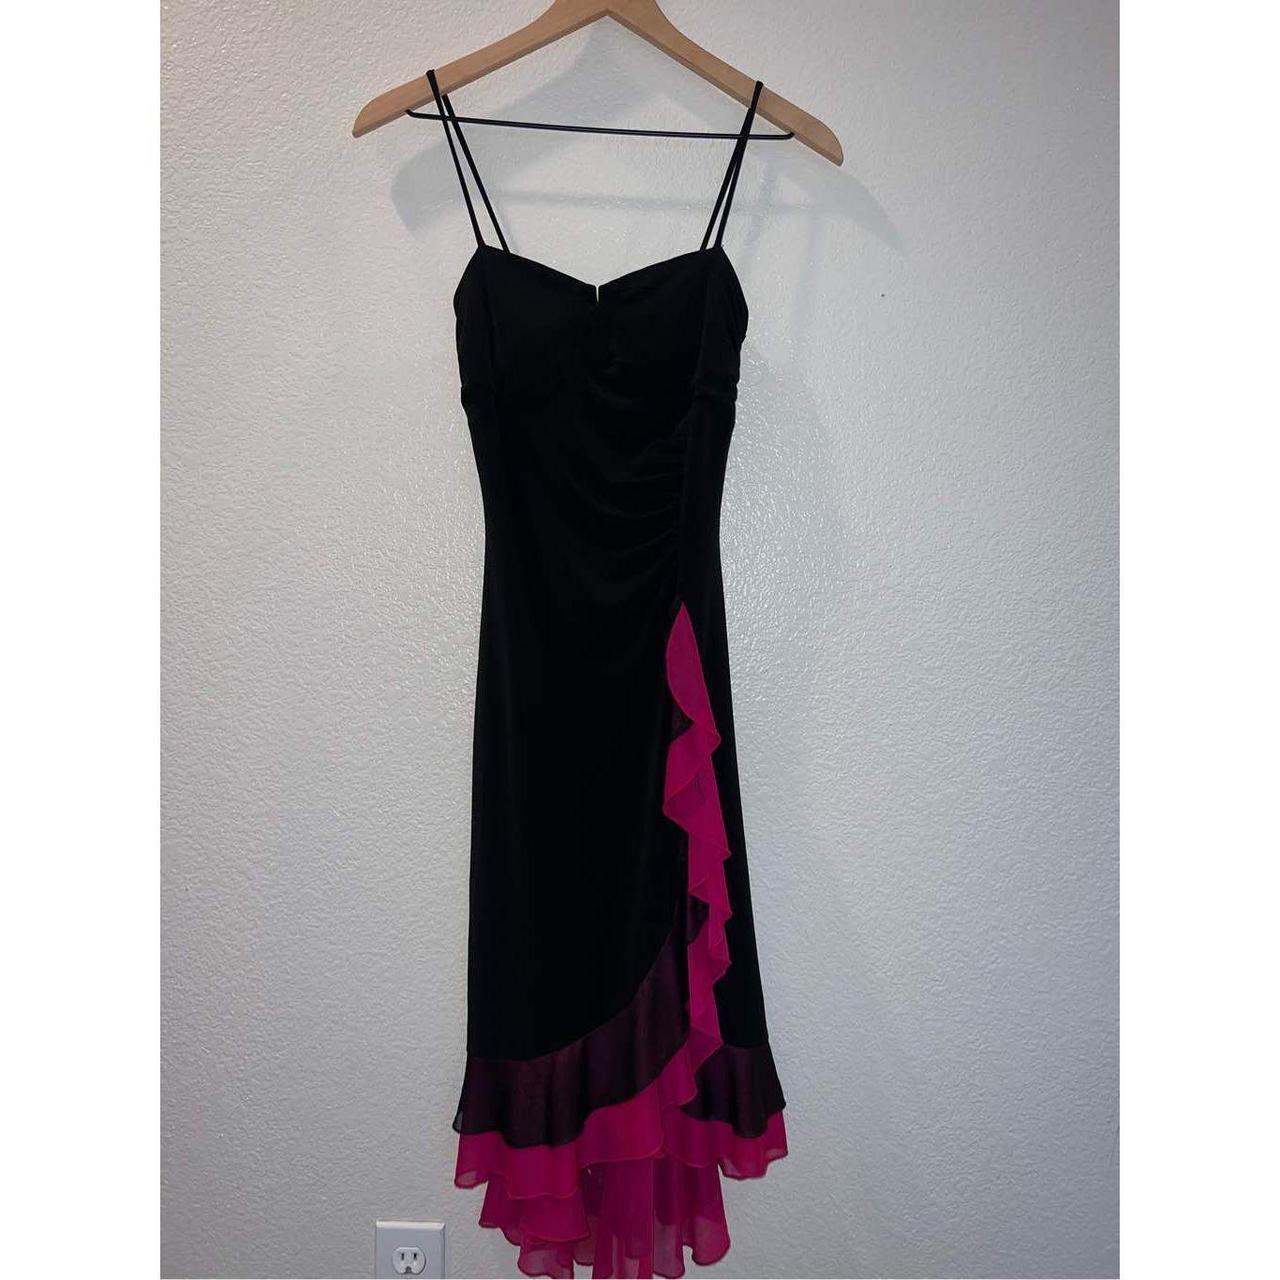 Ruby Rox Women's Black and Pink Dress